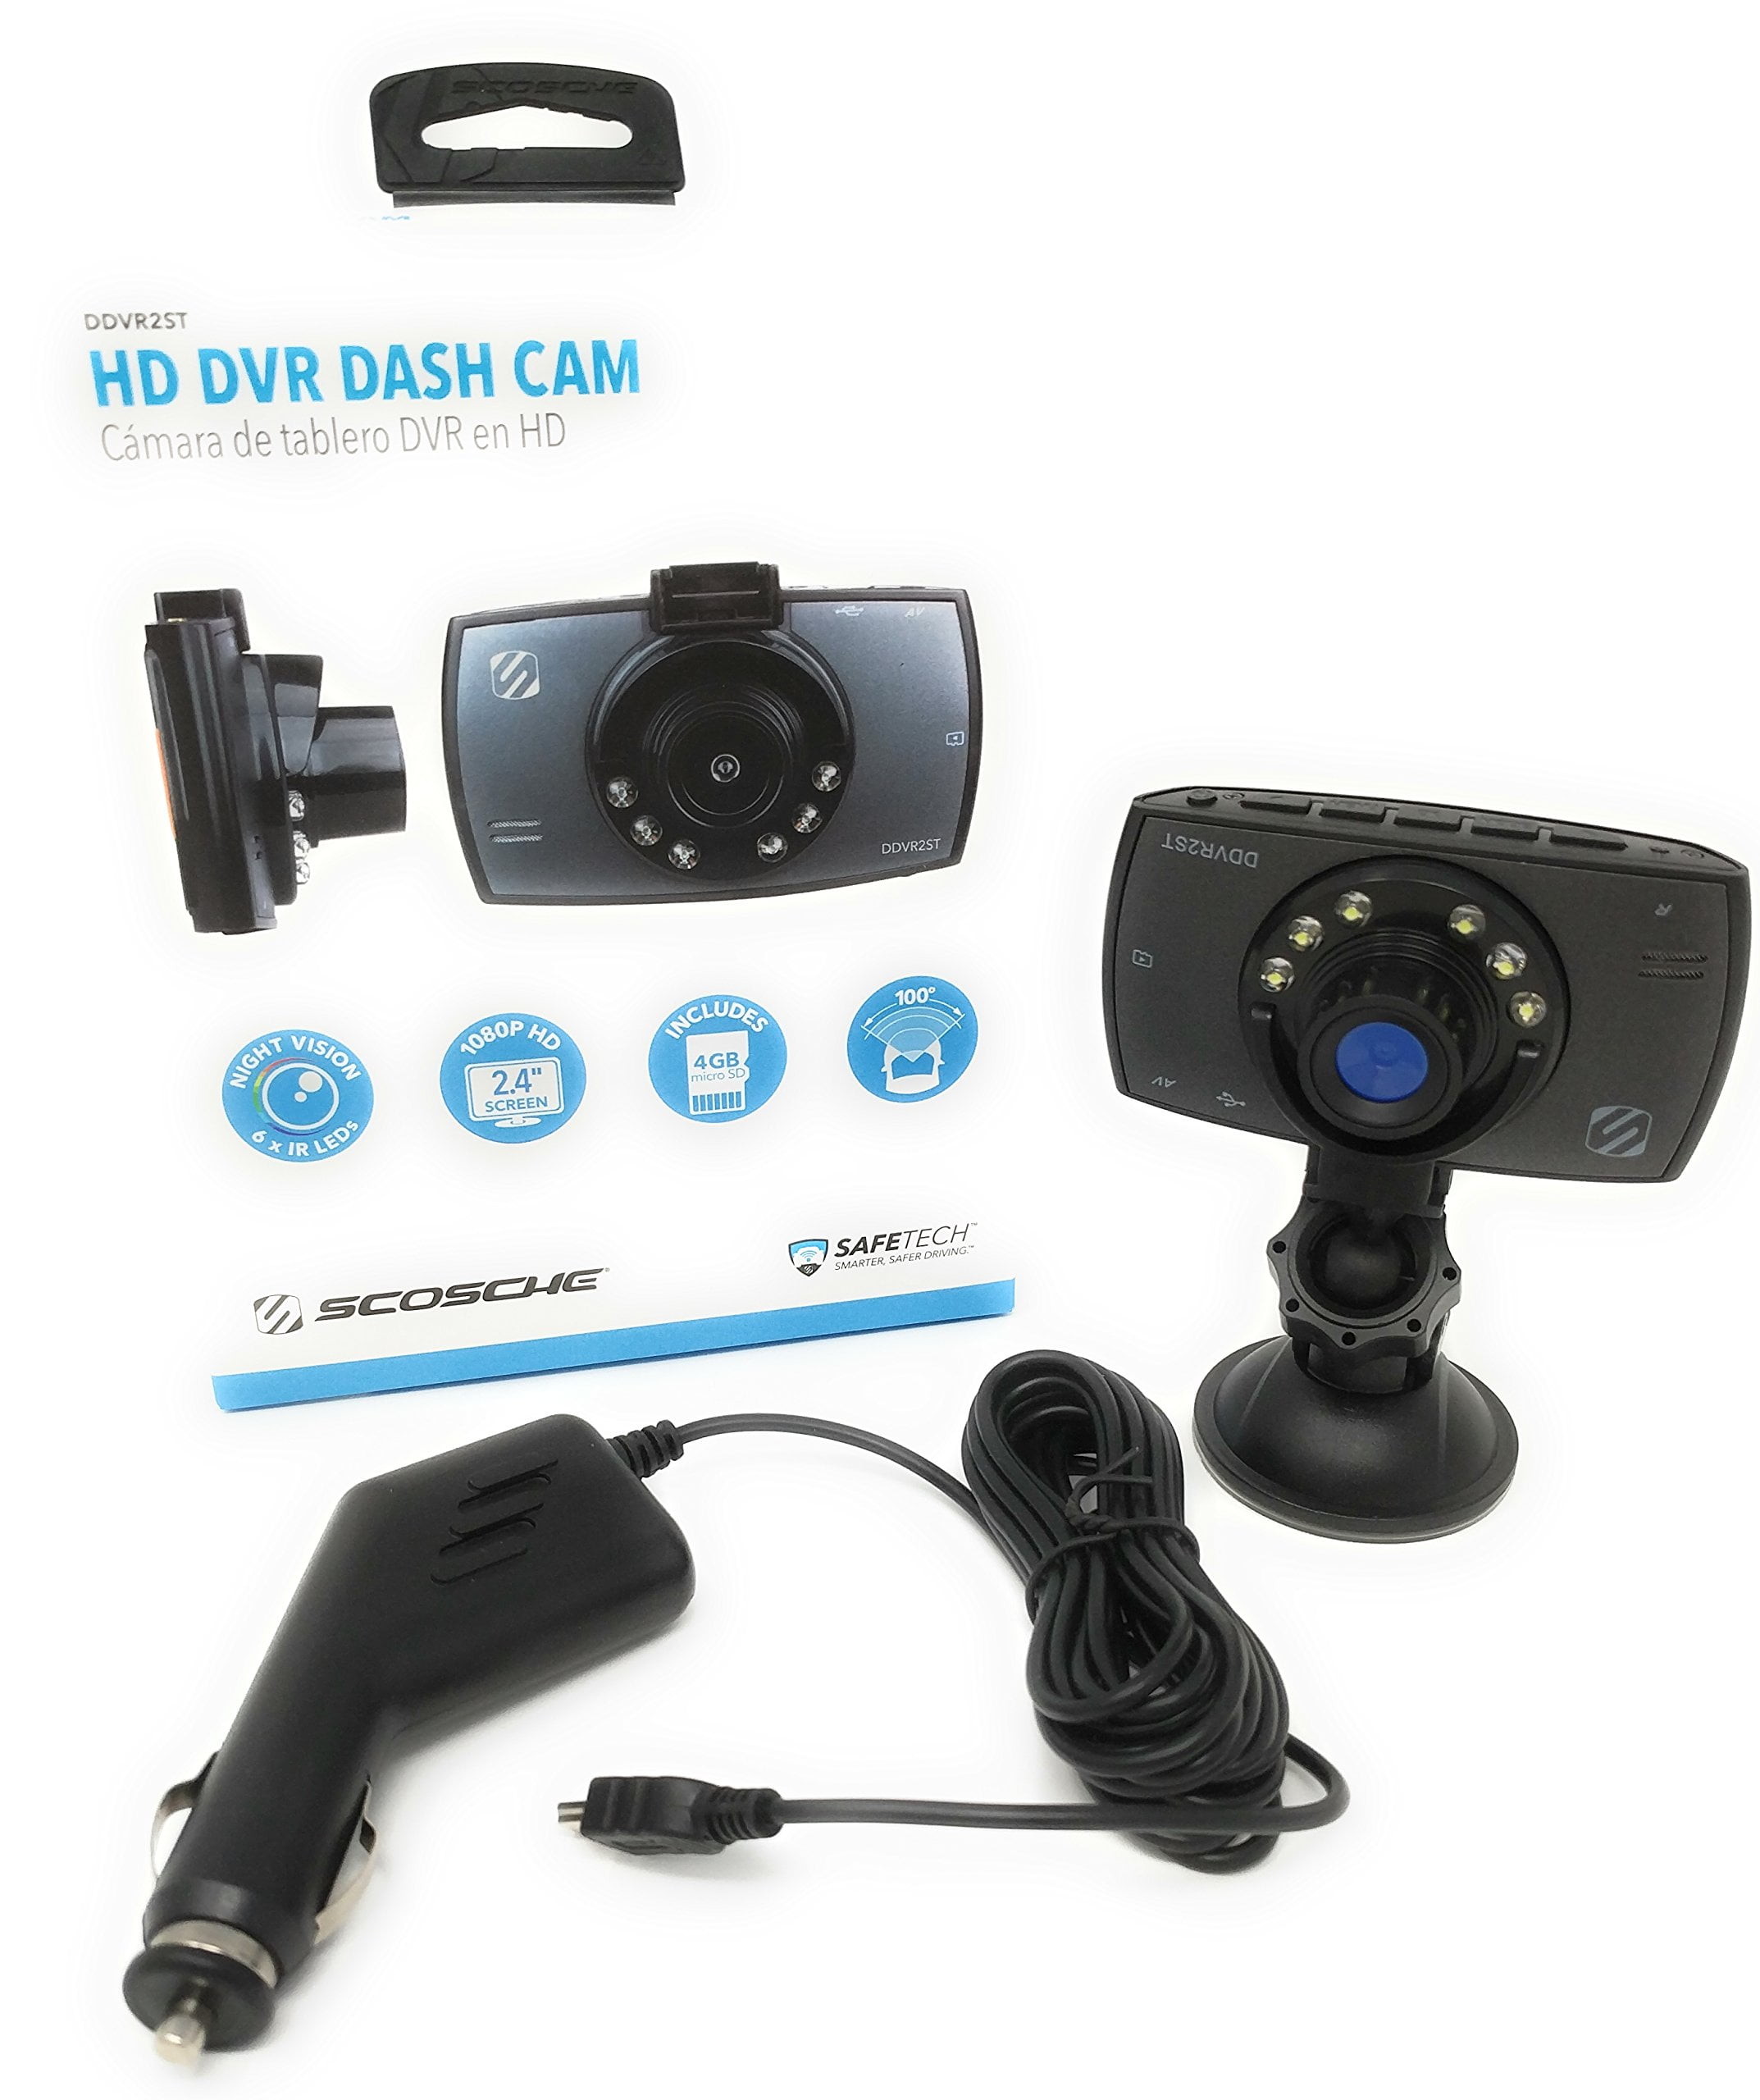 Scosche 1080p HD DVR Dash Camera with 8GB SD Card, DDVR2ST